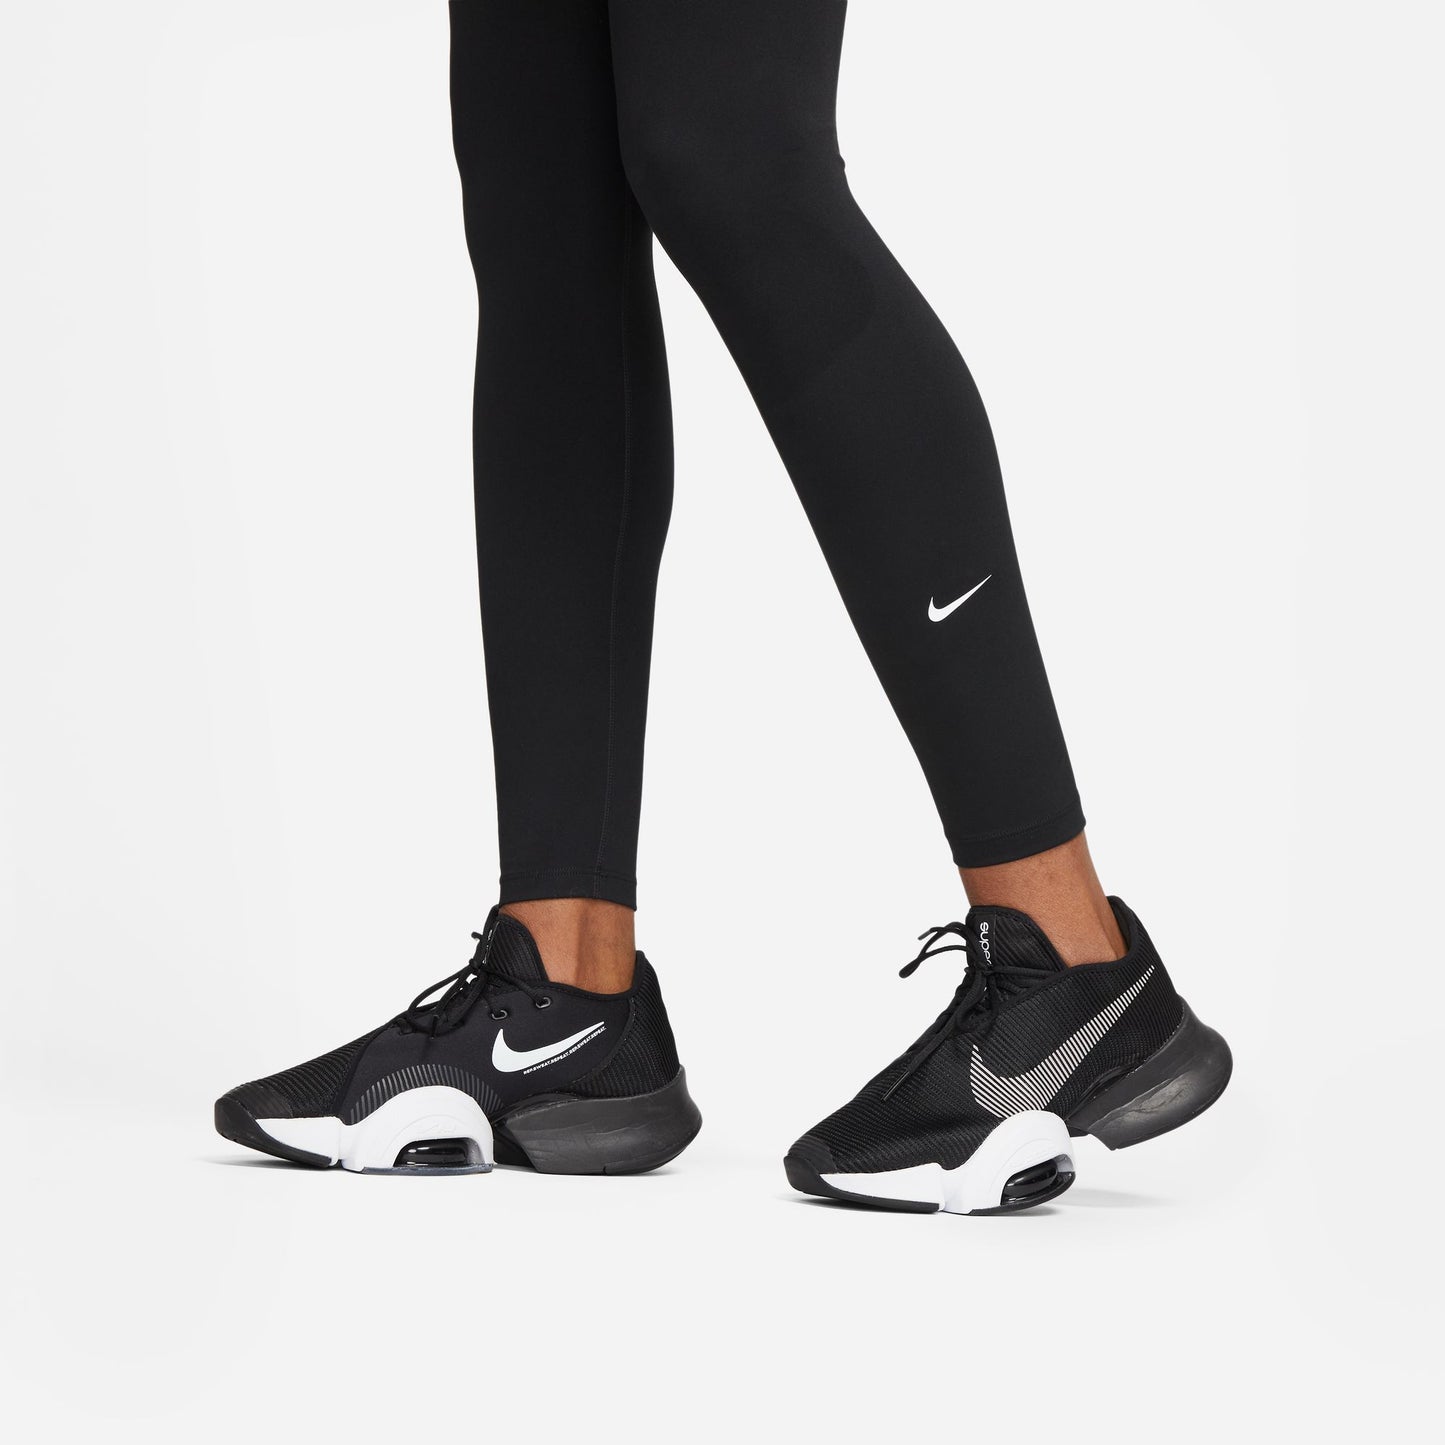 Nike One - Leggings de talle alto para mujer - Negro